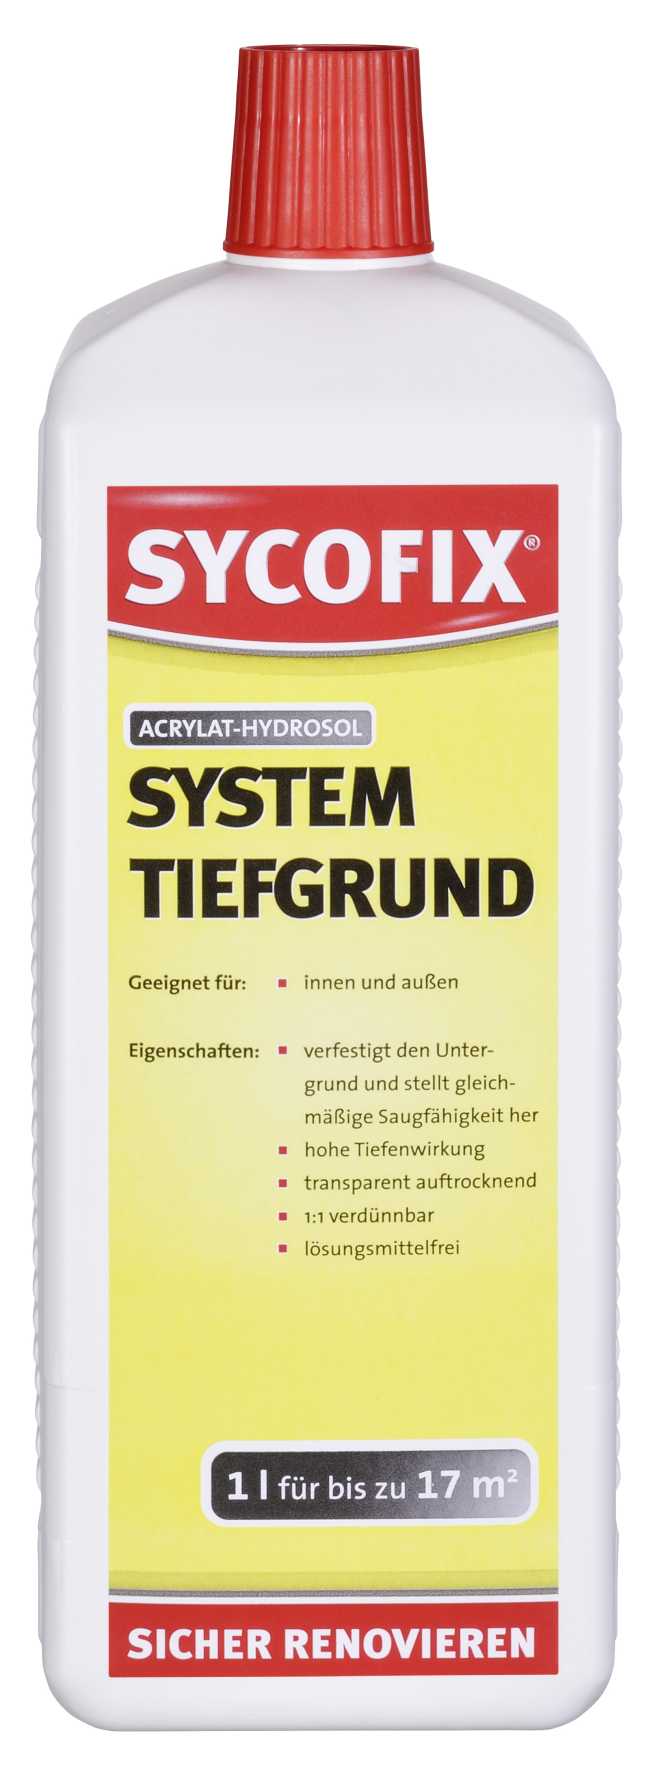 SIEDER GMBH Sycofix® System Tiefgrund LF 1l 